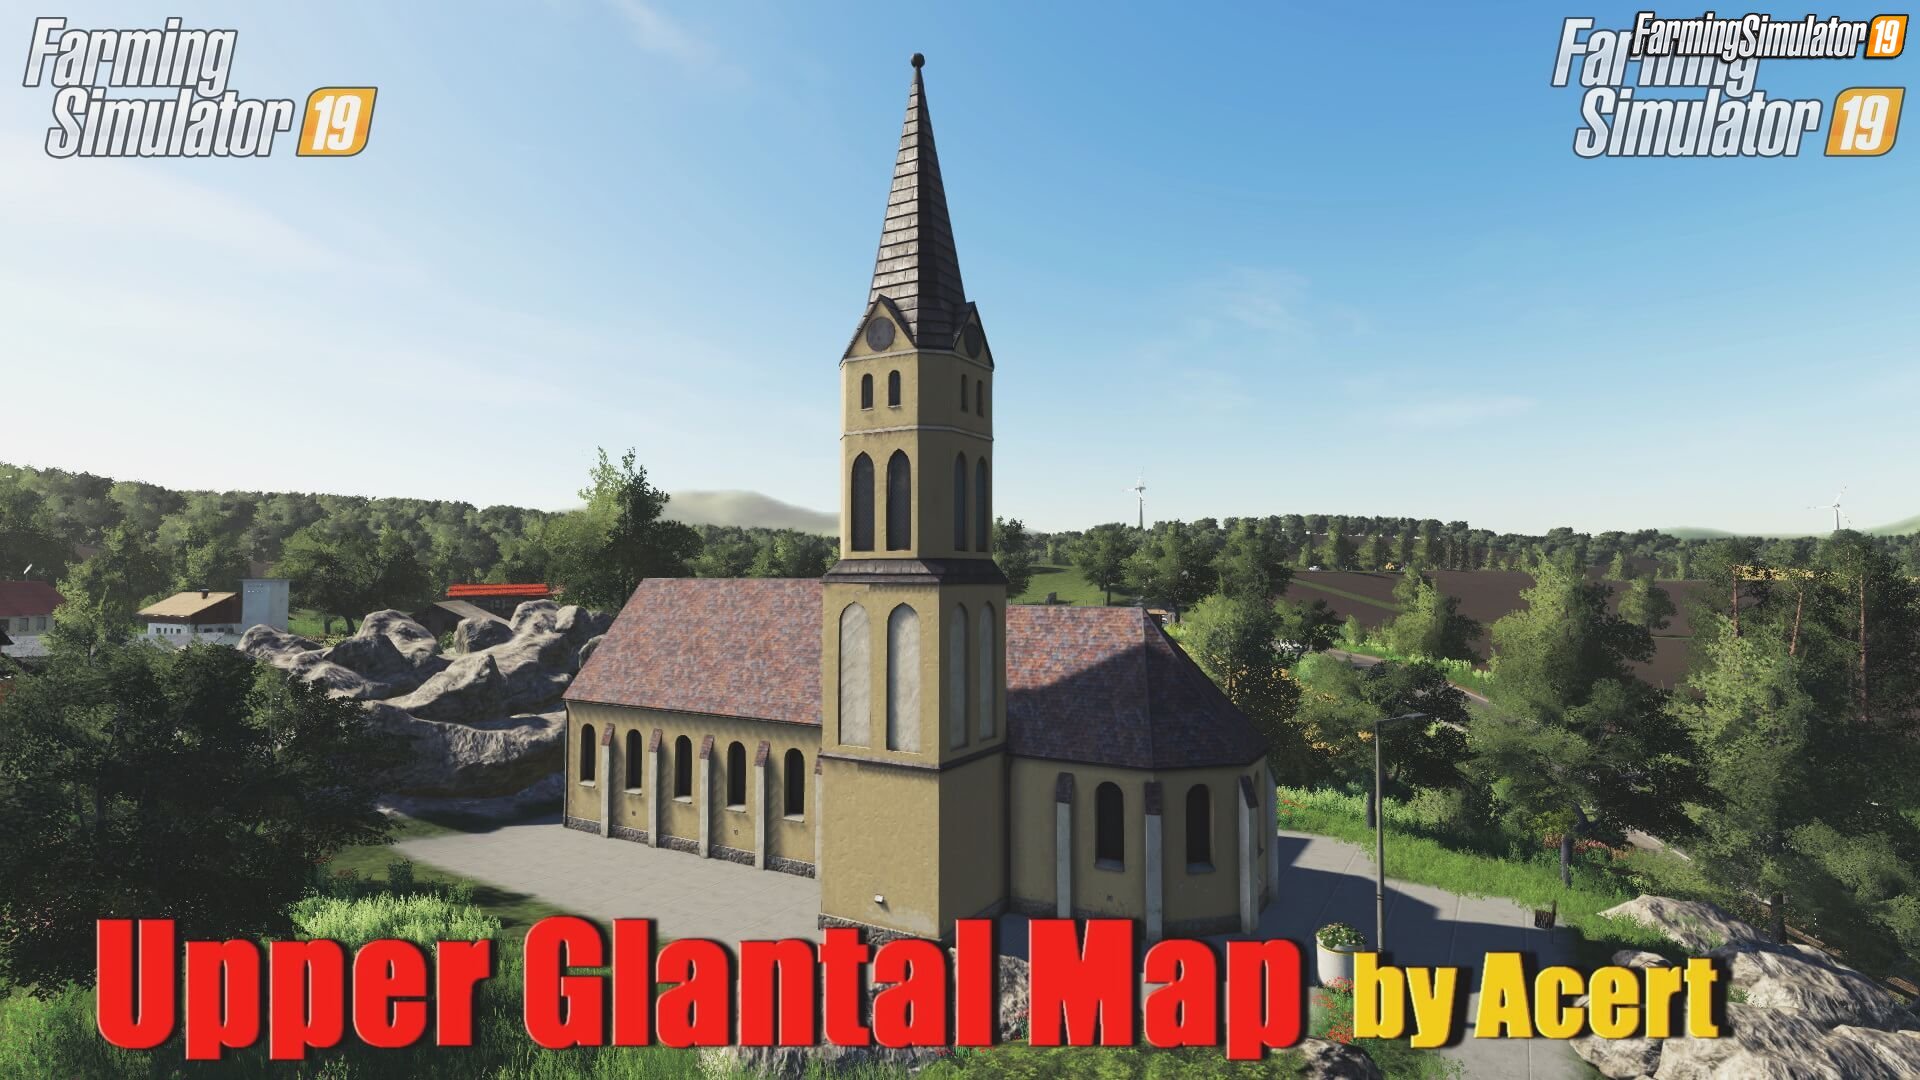 Upper Glantal Map by Acert - Farming Simulator 19